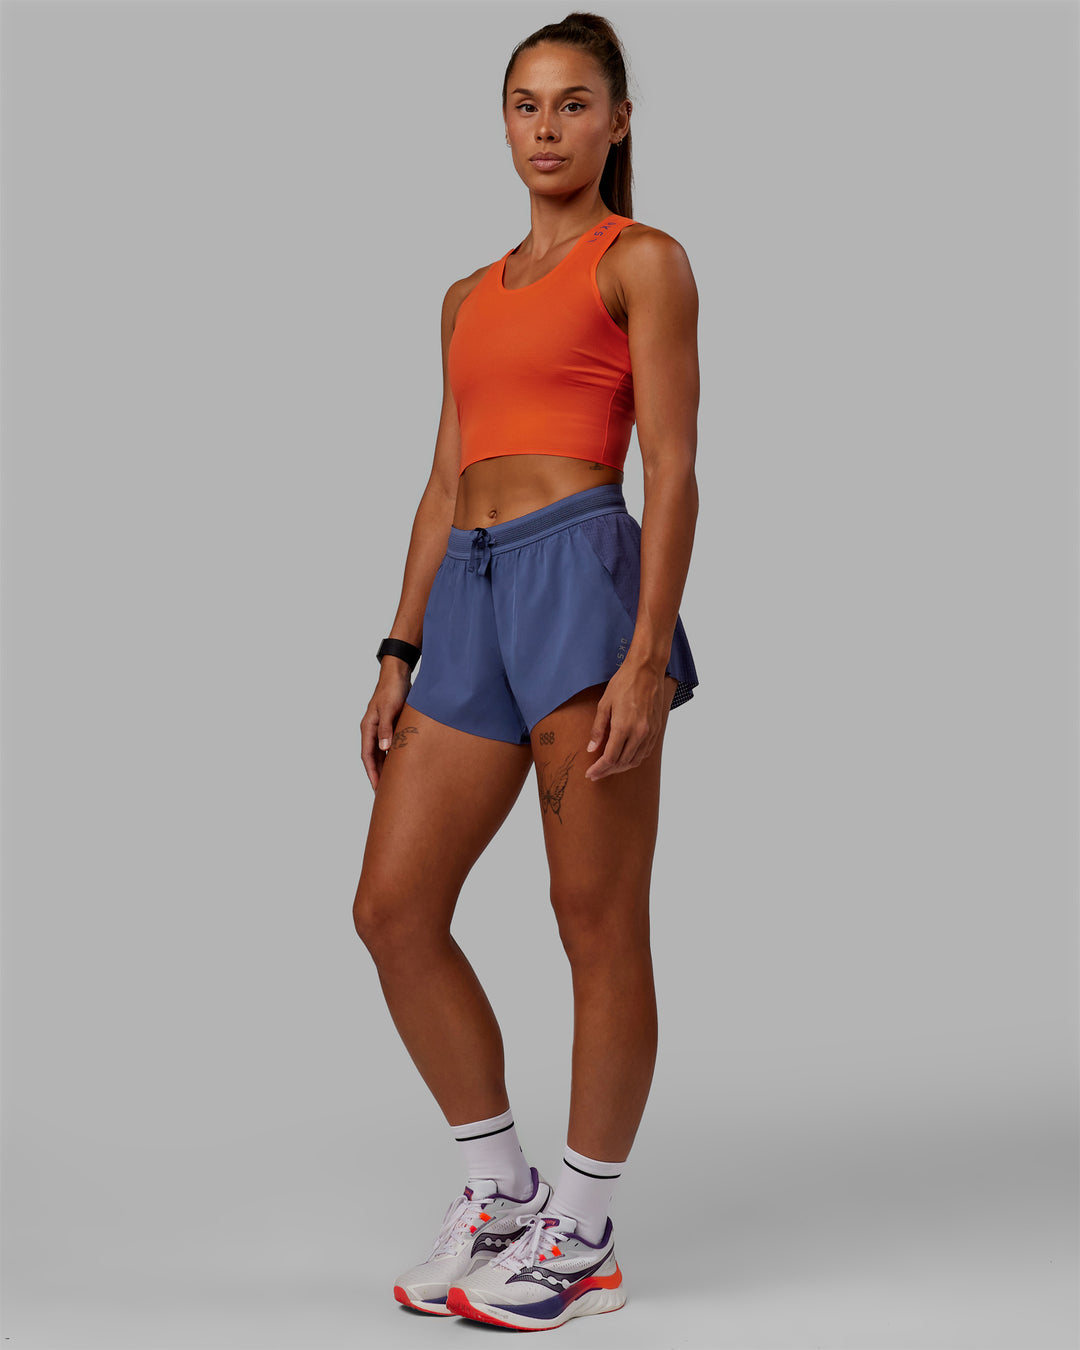 Woman wearing Accelerate Run Shorts - Future Dusk